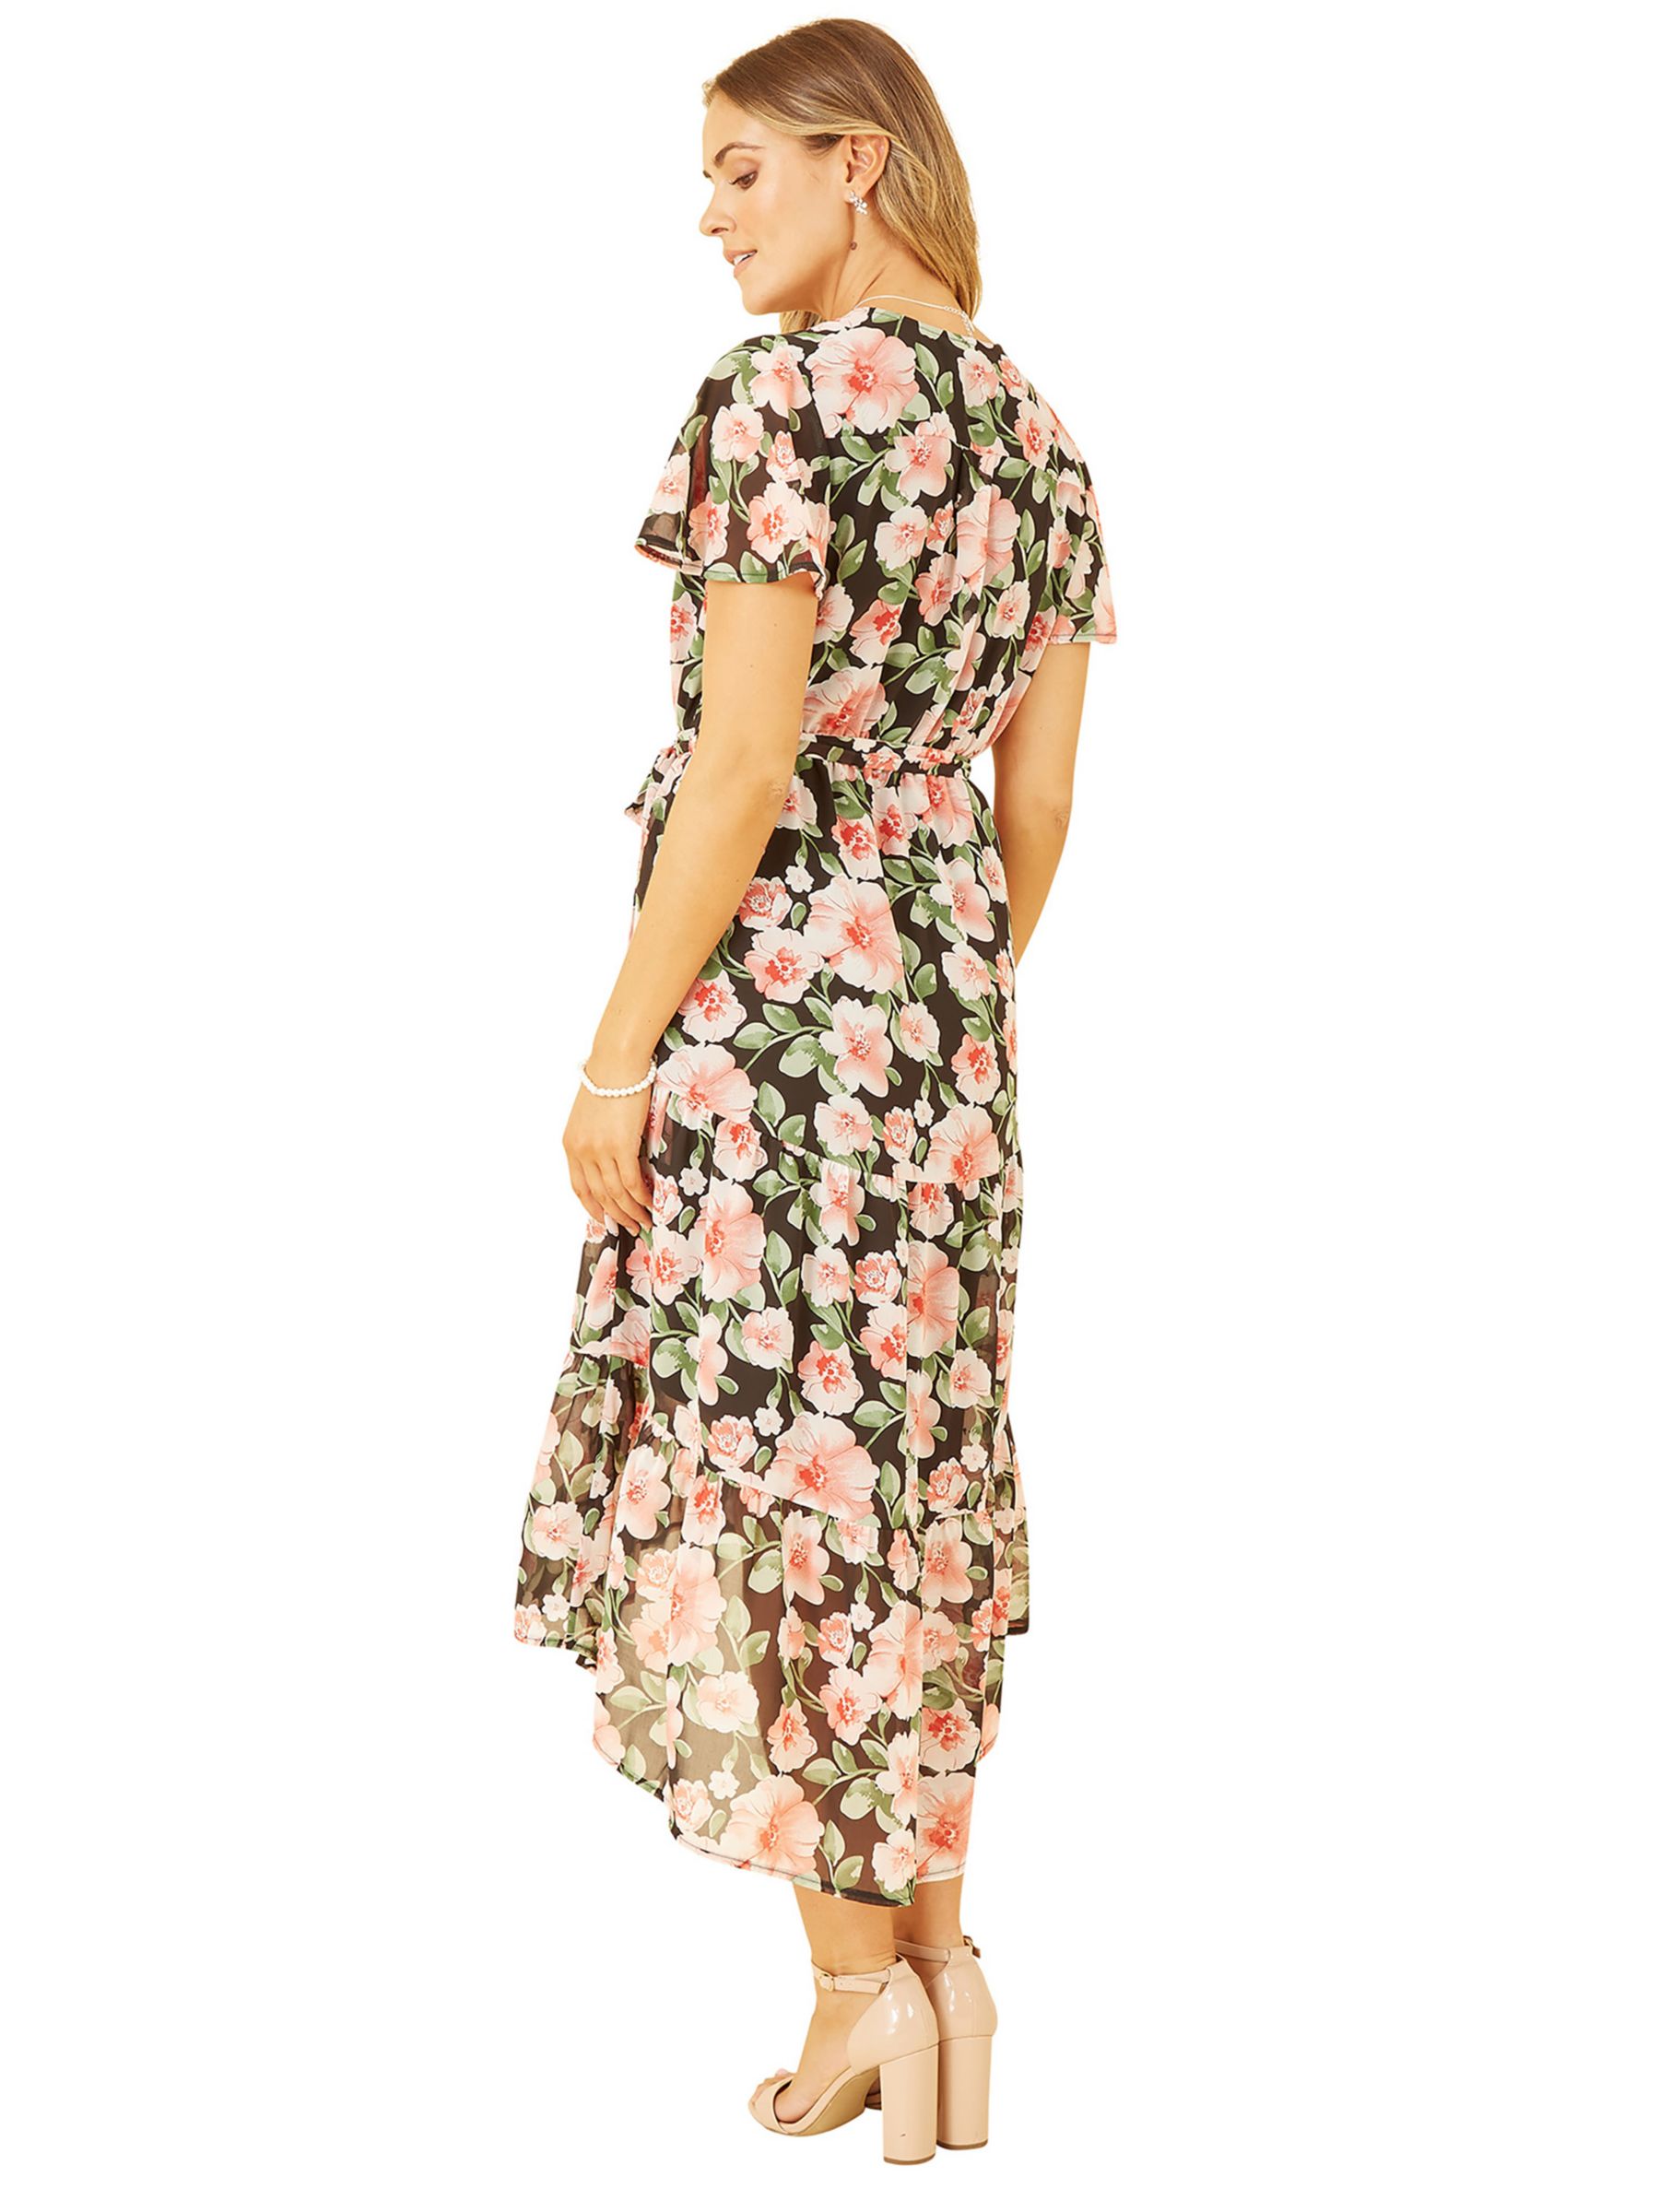 Buy Mela London Floral Wrap Tiered Dipped Hem Dress Online at johnlewis.com